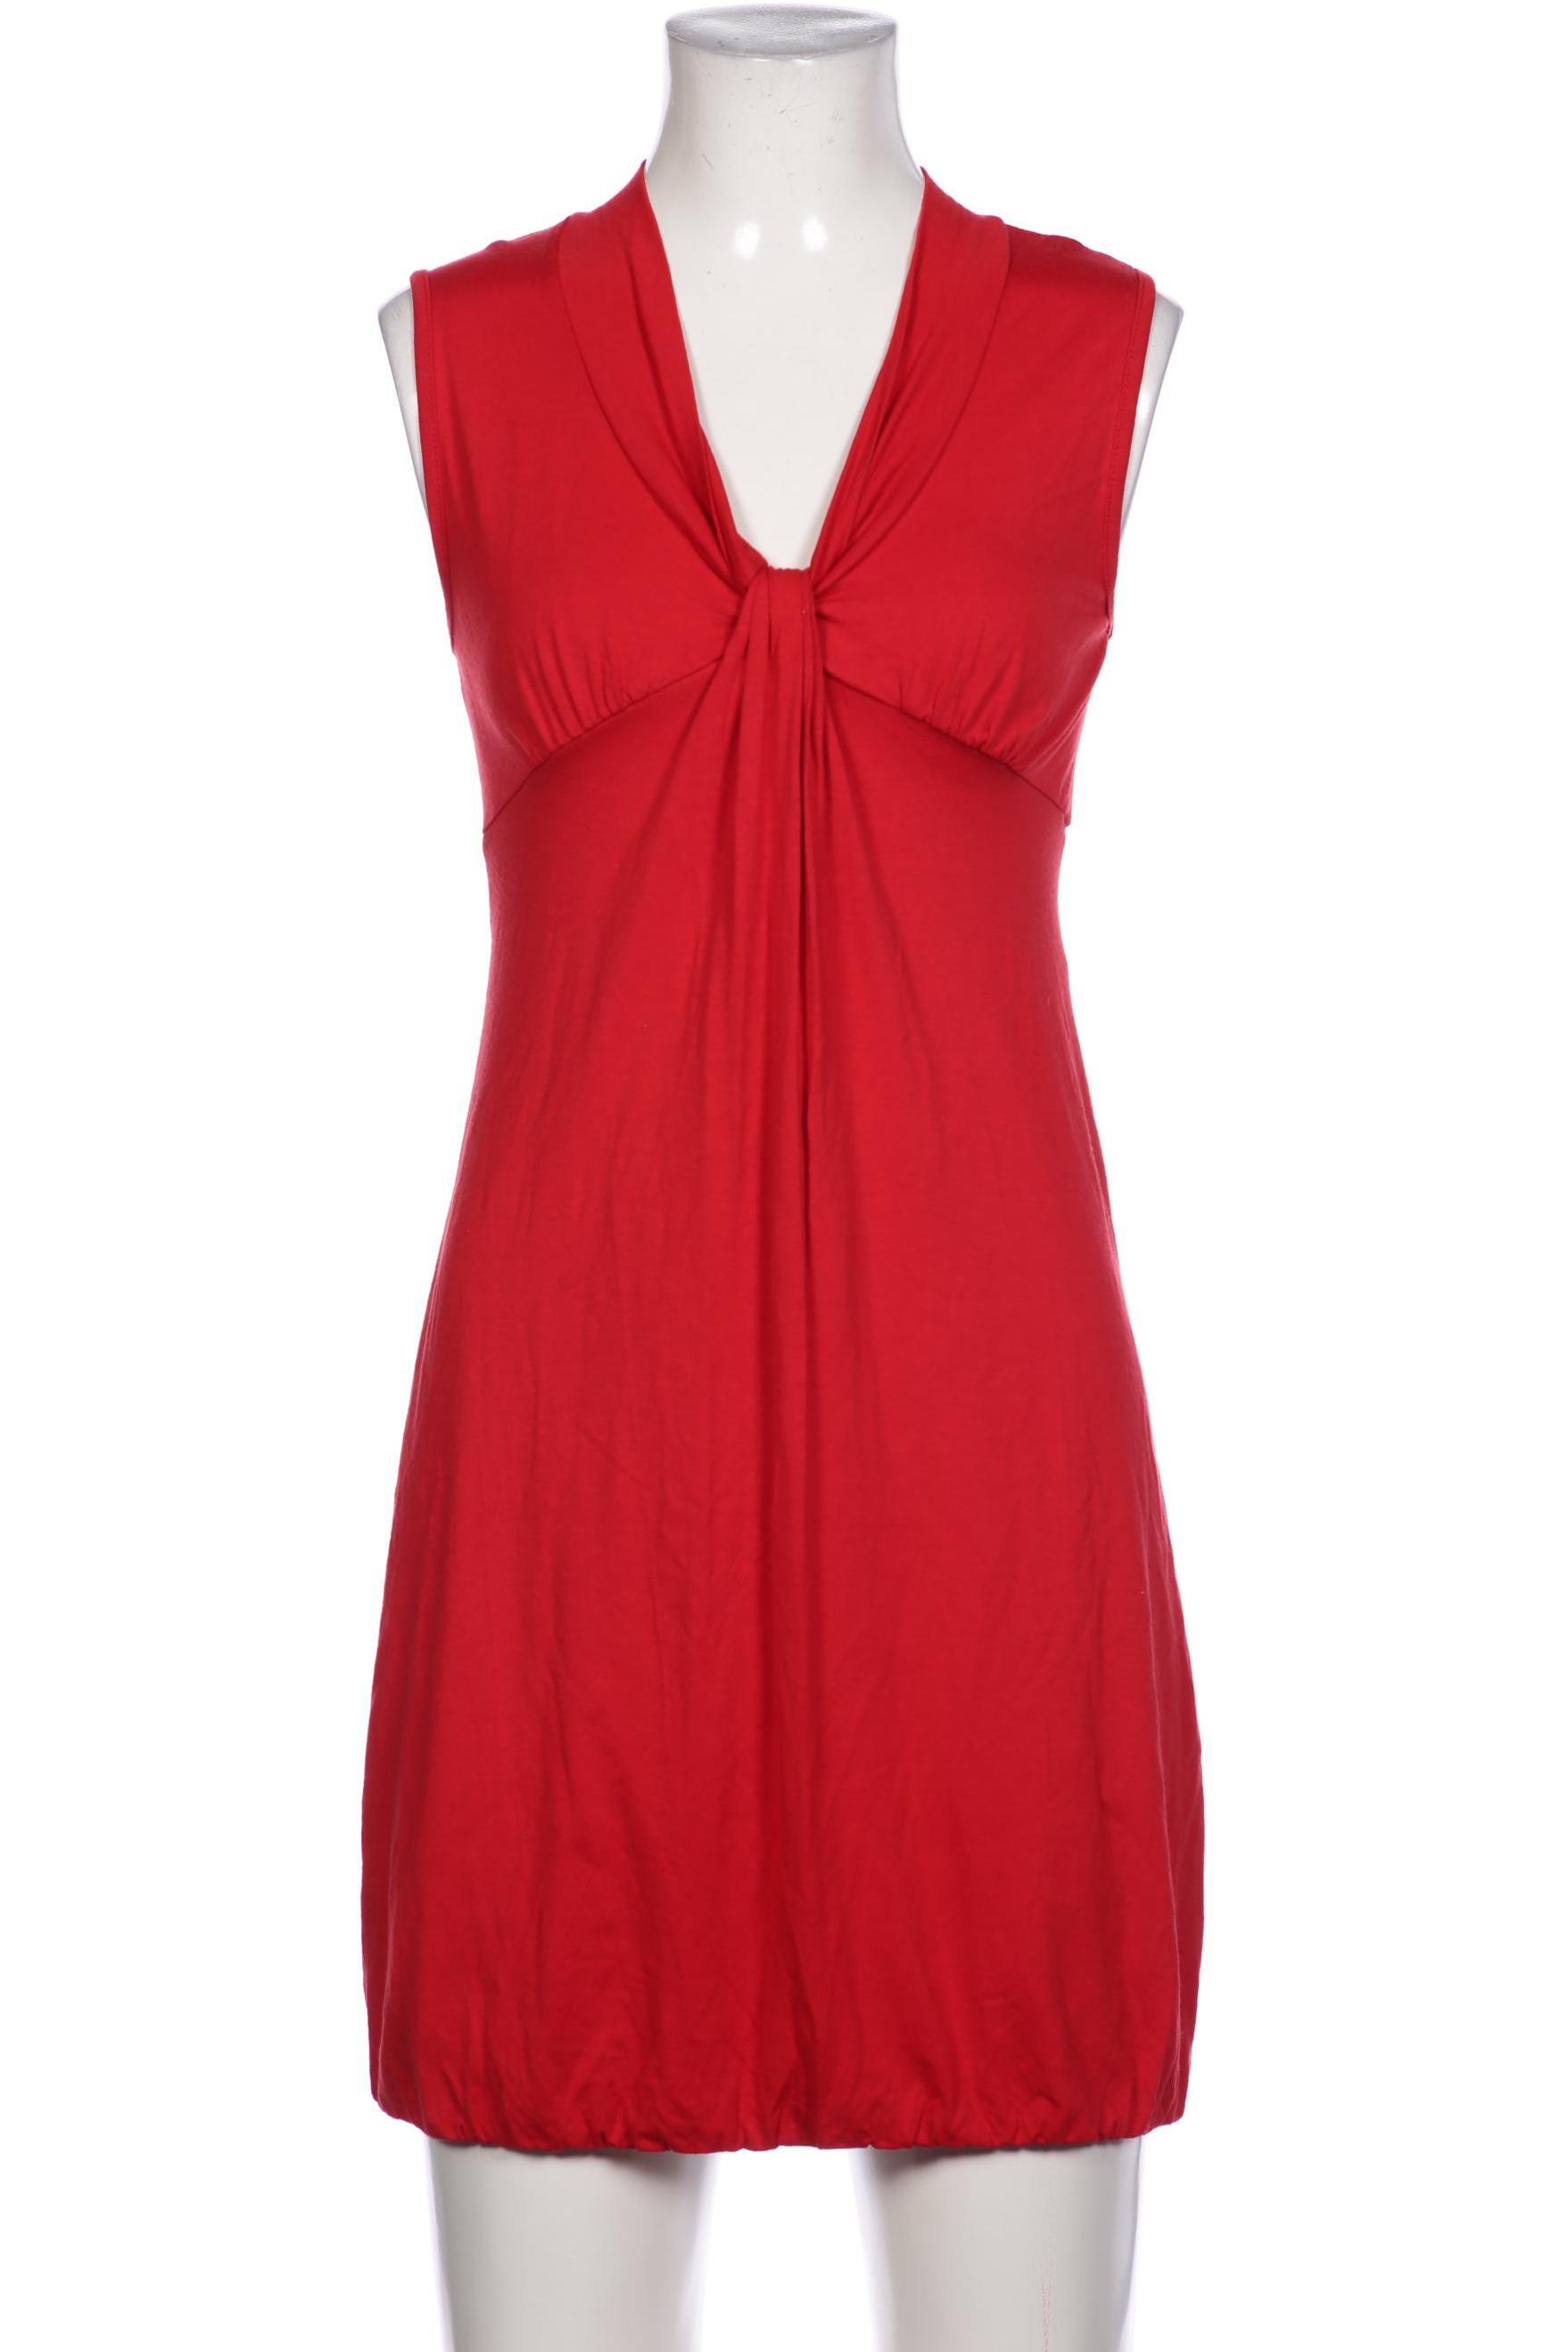 etam Damen Kleid, rot, Gr. 38 von etam